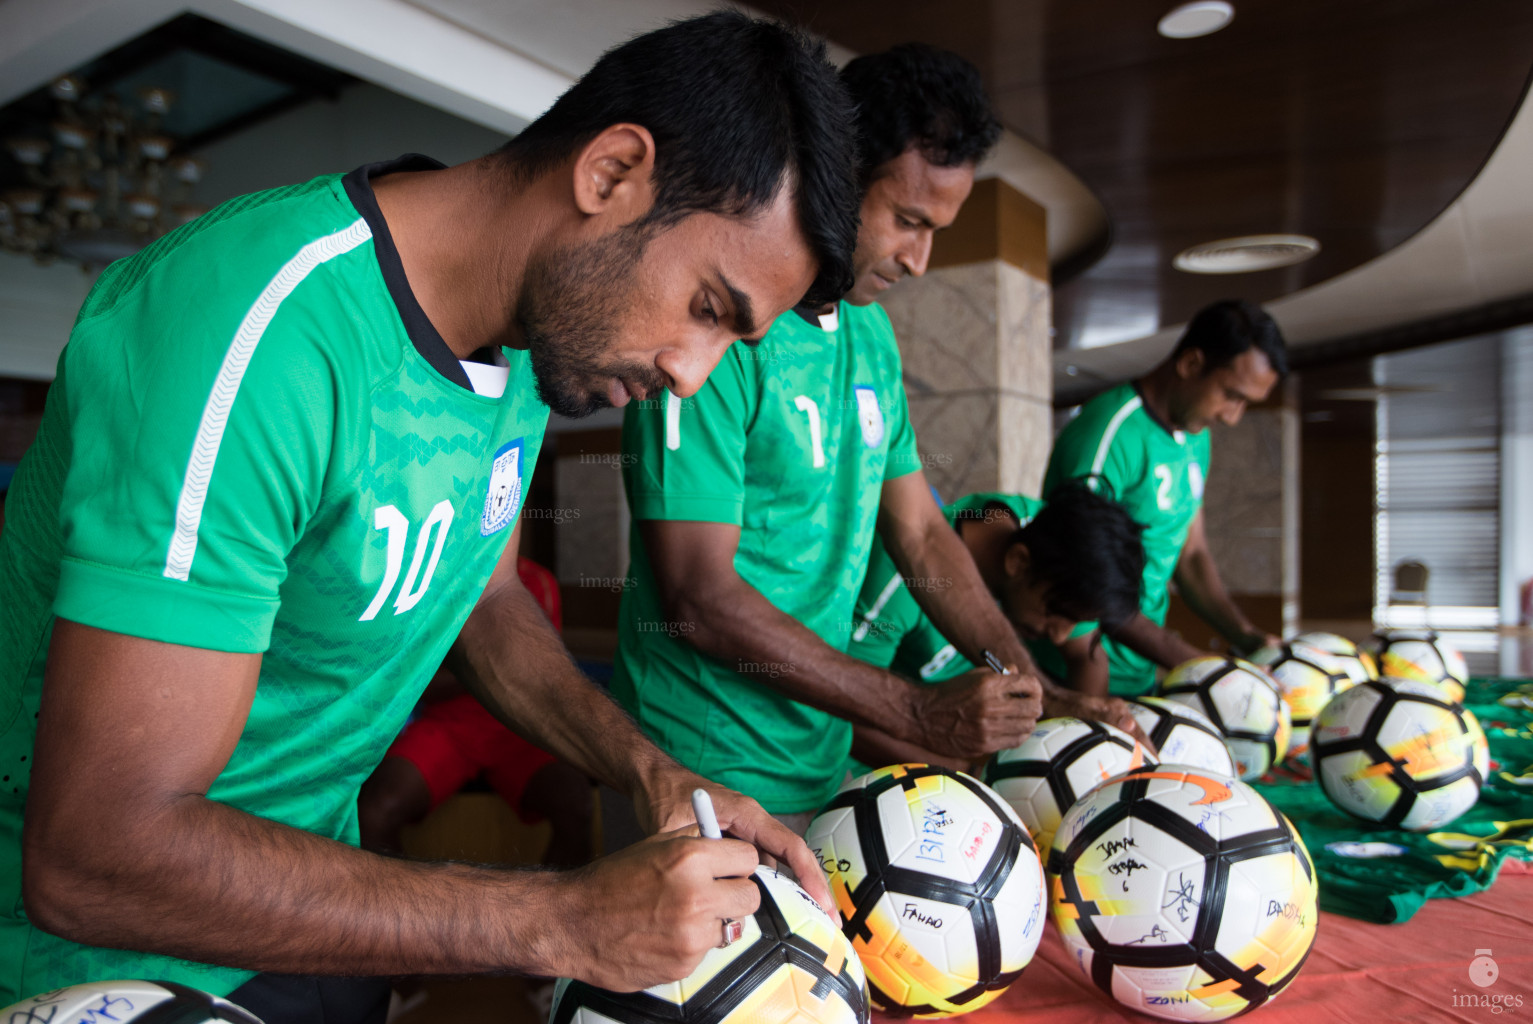 Jersey, balls signing and team photos SAFF Suzuki Cup 2018 in Dhaka, Bangladesh, Sunday, September 09, 2018. (Images.mv Photo/Ismail Thoriq)